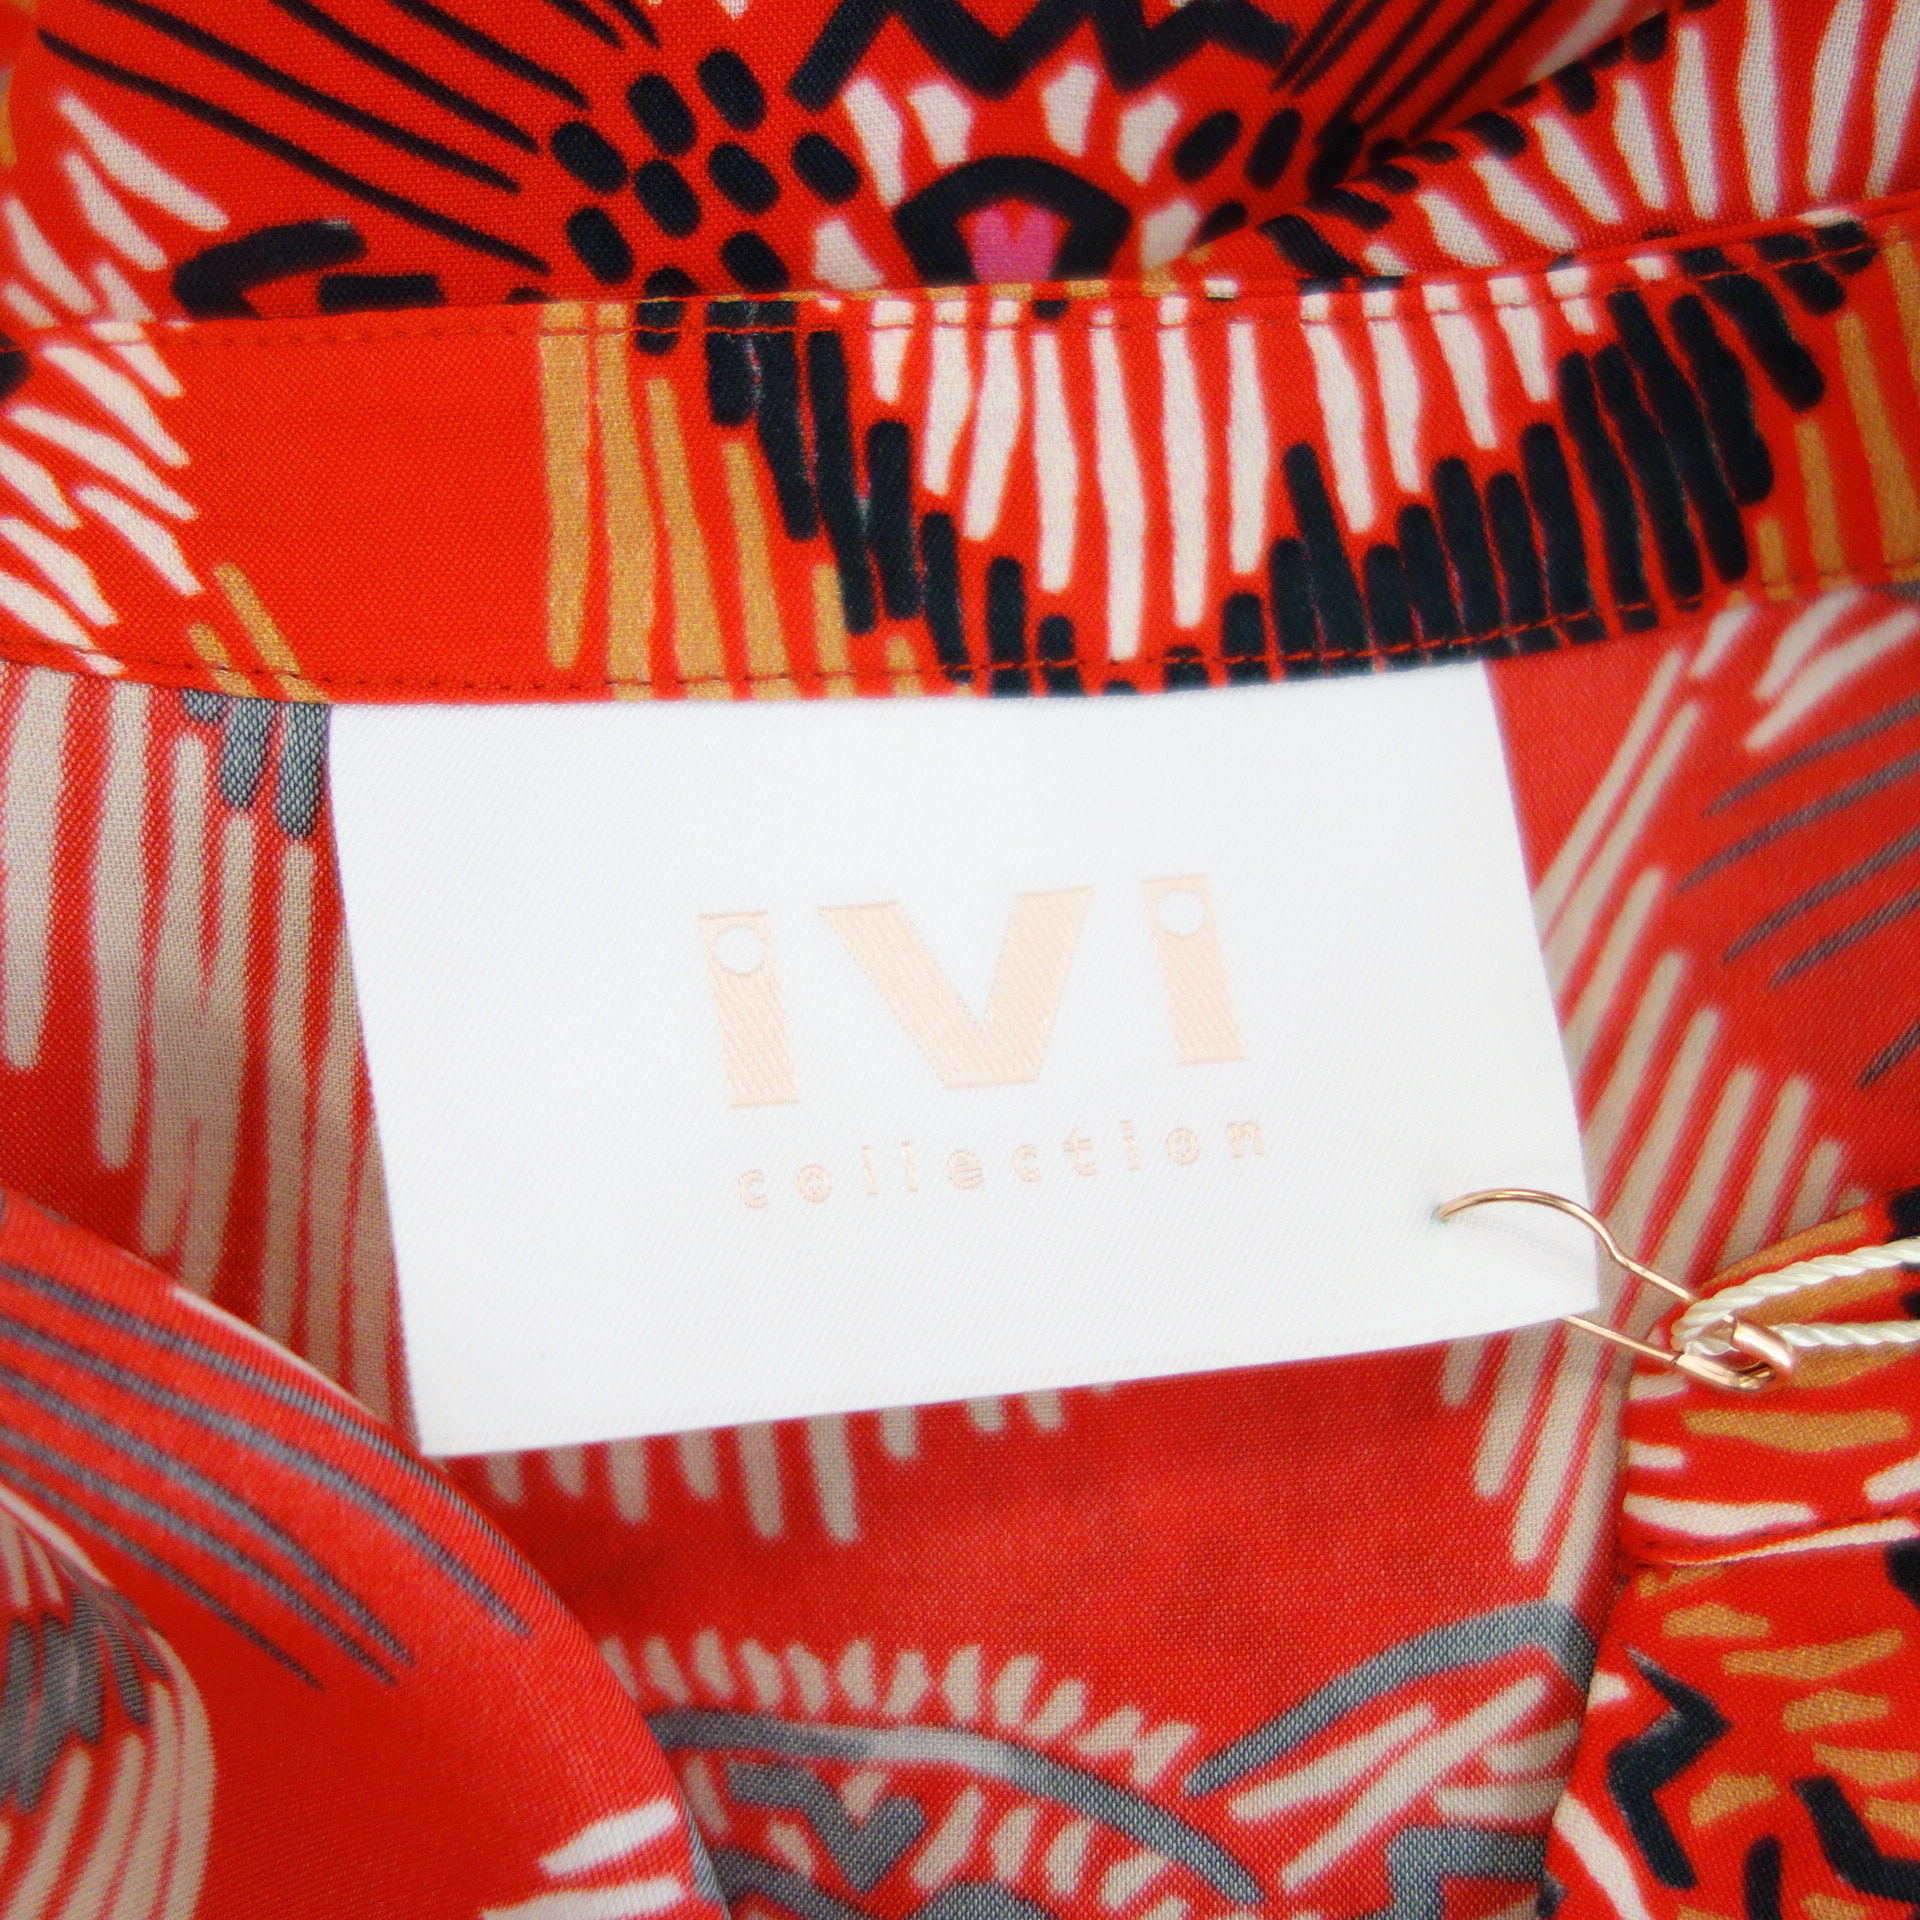 IVI Damen Bluse Tunika Oberteil Hemd Shirt Viskose Seide Print Modell BIG CAT Rot 